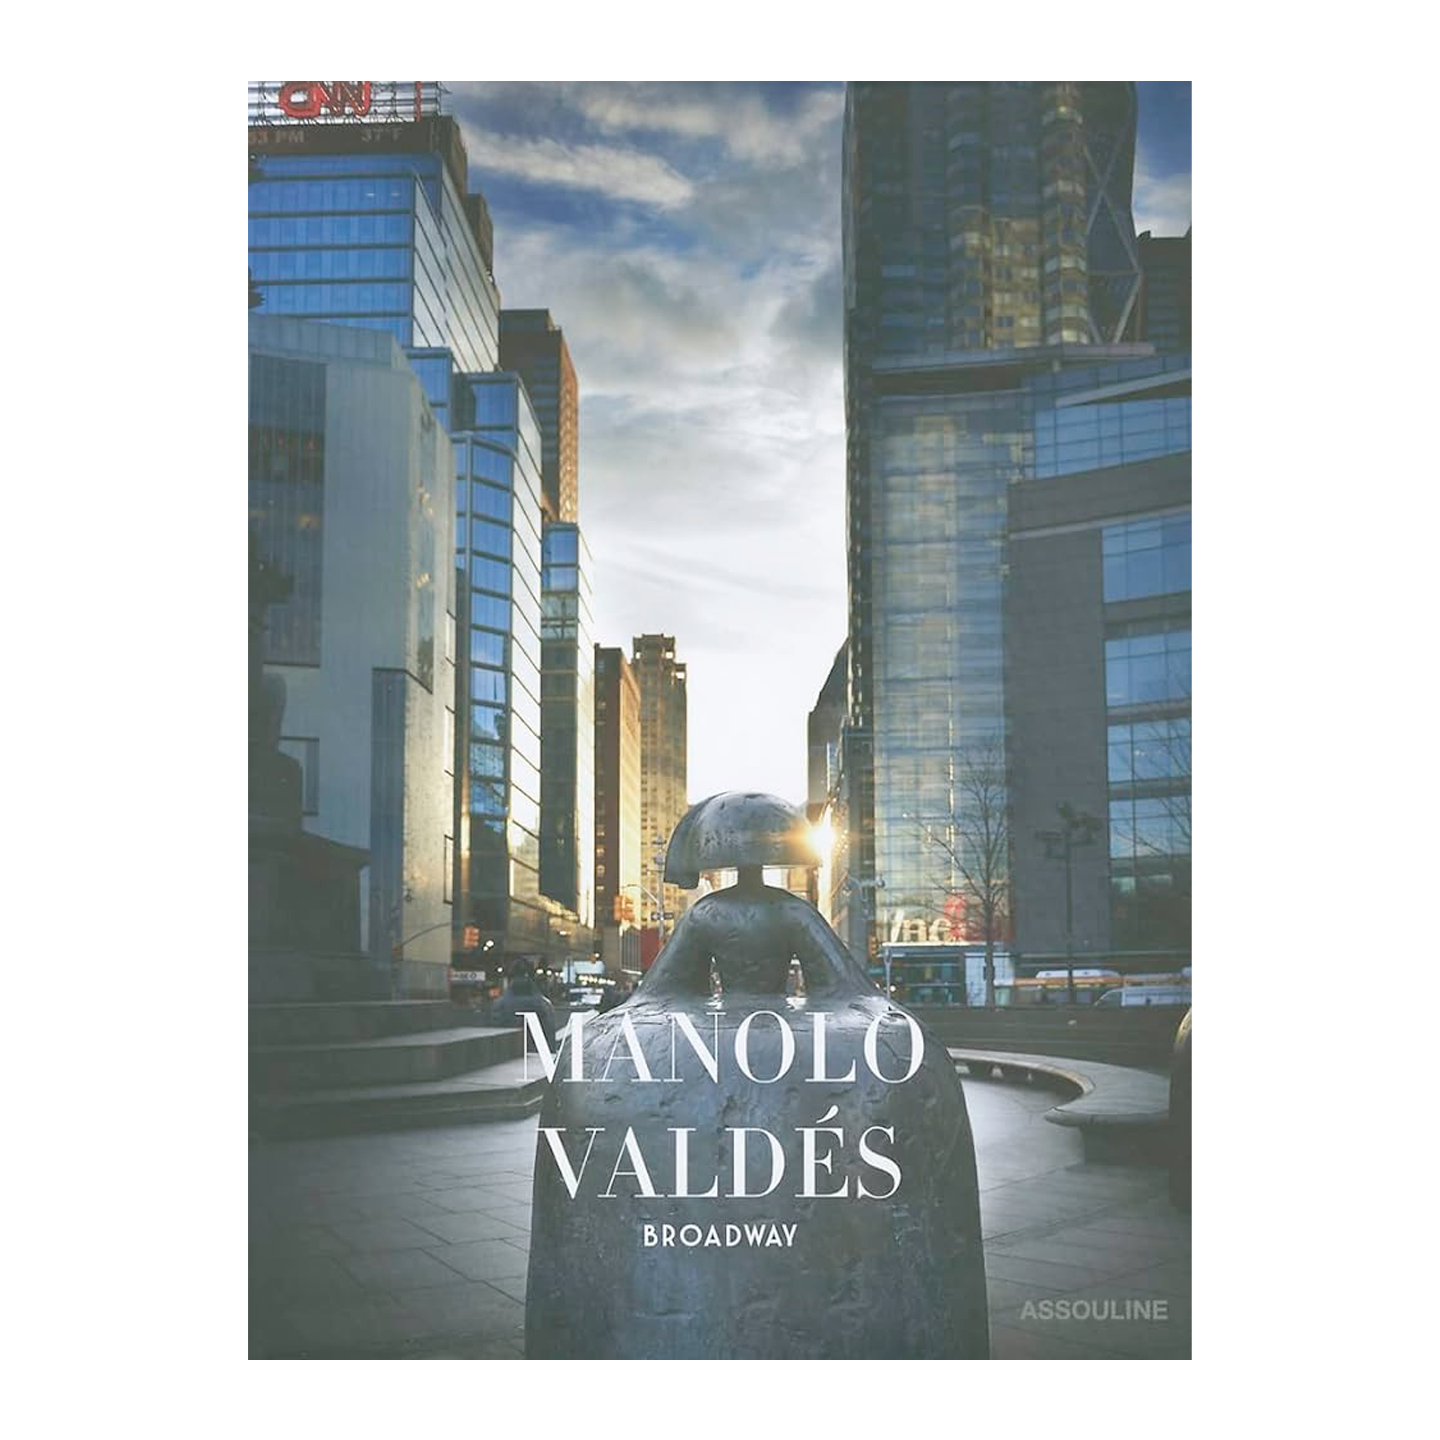 Manolo Valdes: Broadway, ASSOULINE - RSVP Style